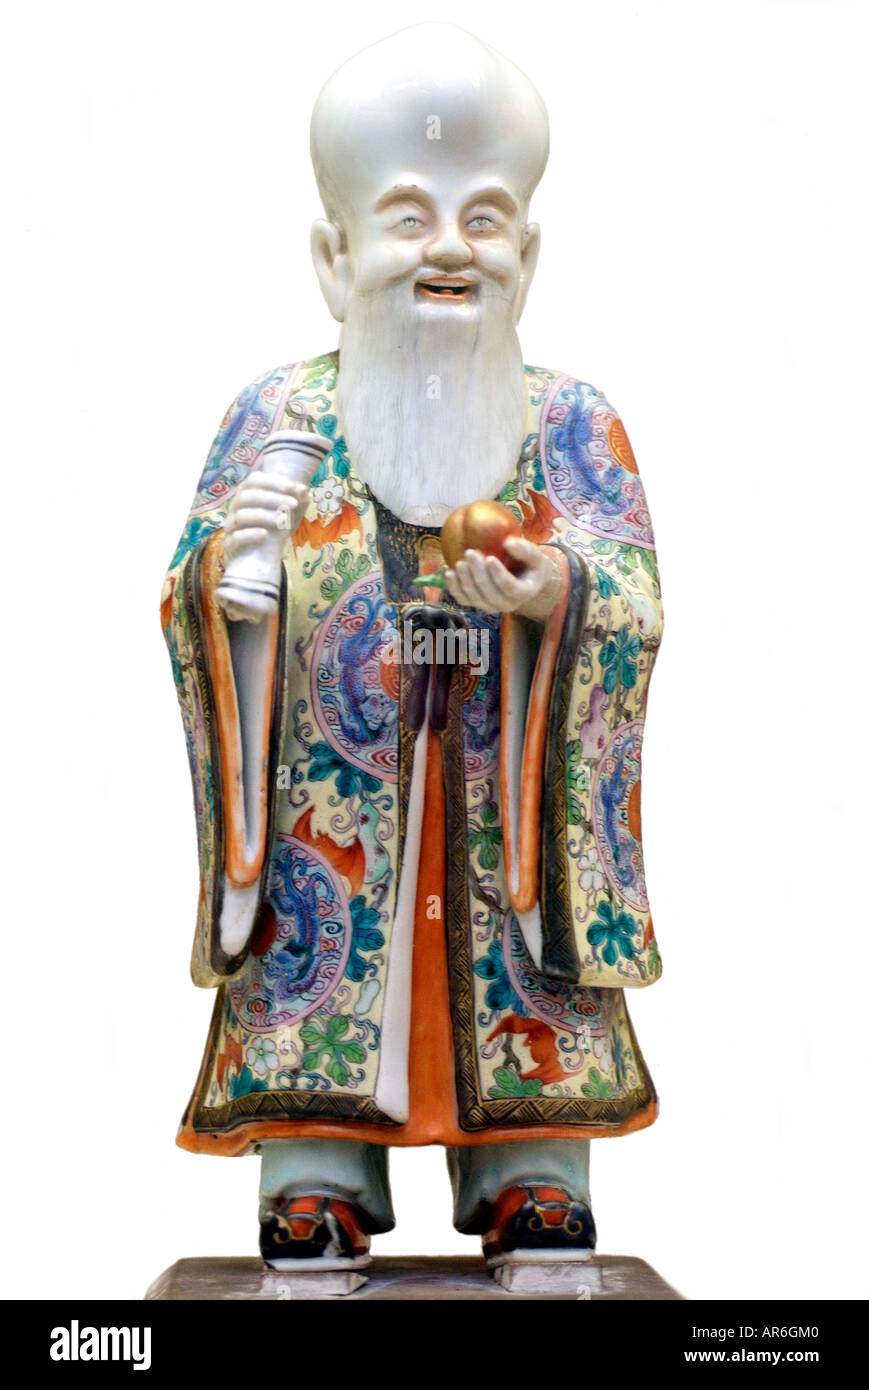 japanese porcelain japan figure antique ceramic  kimono wise man bald head rare decorative beard pearl wisdom Stock Photo